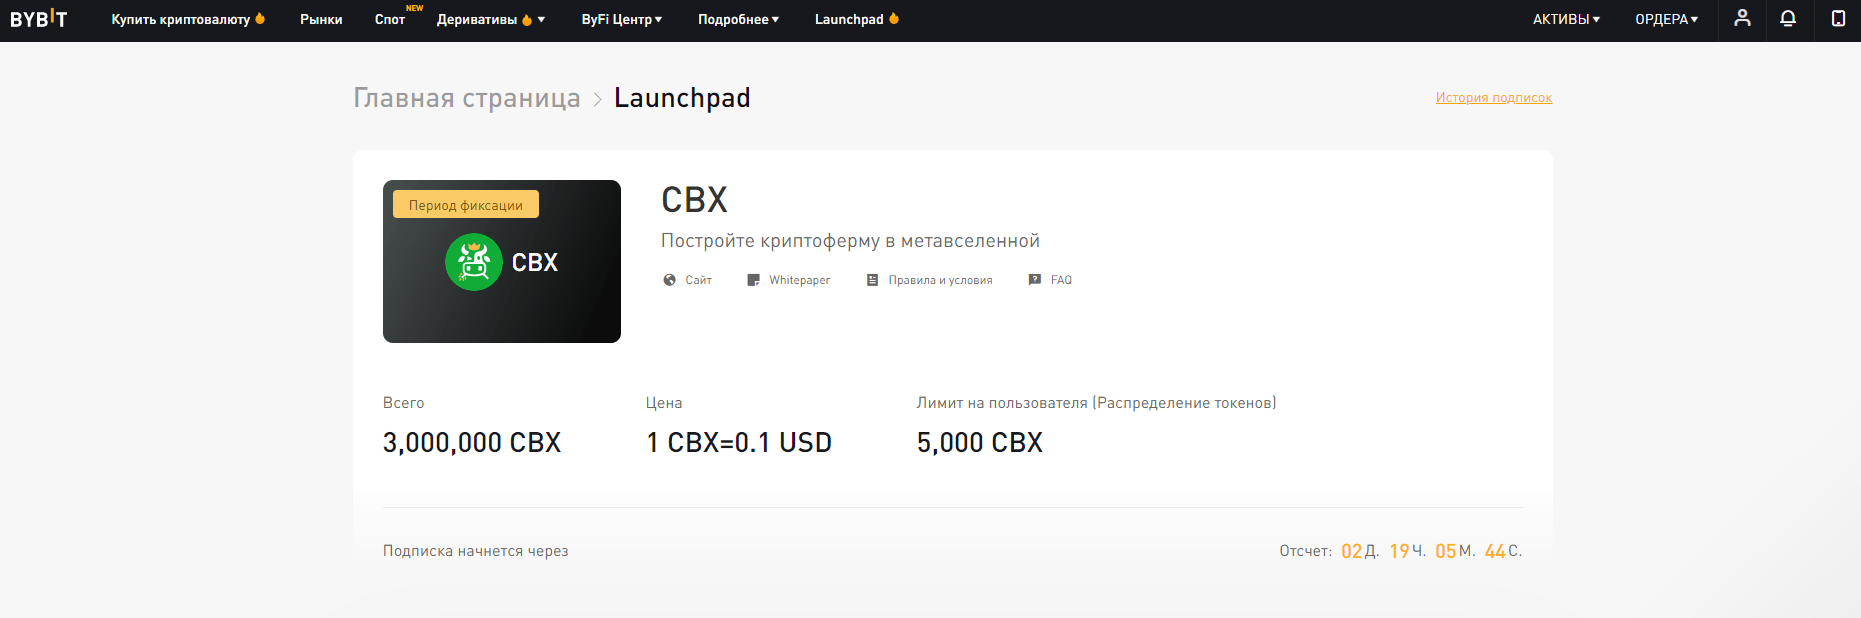 Подробно о проекте CBX в Launchpad ByBit